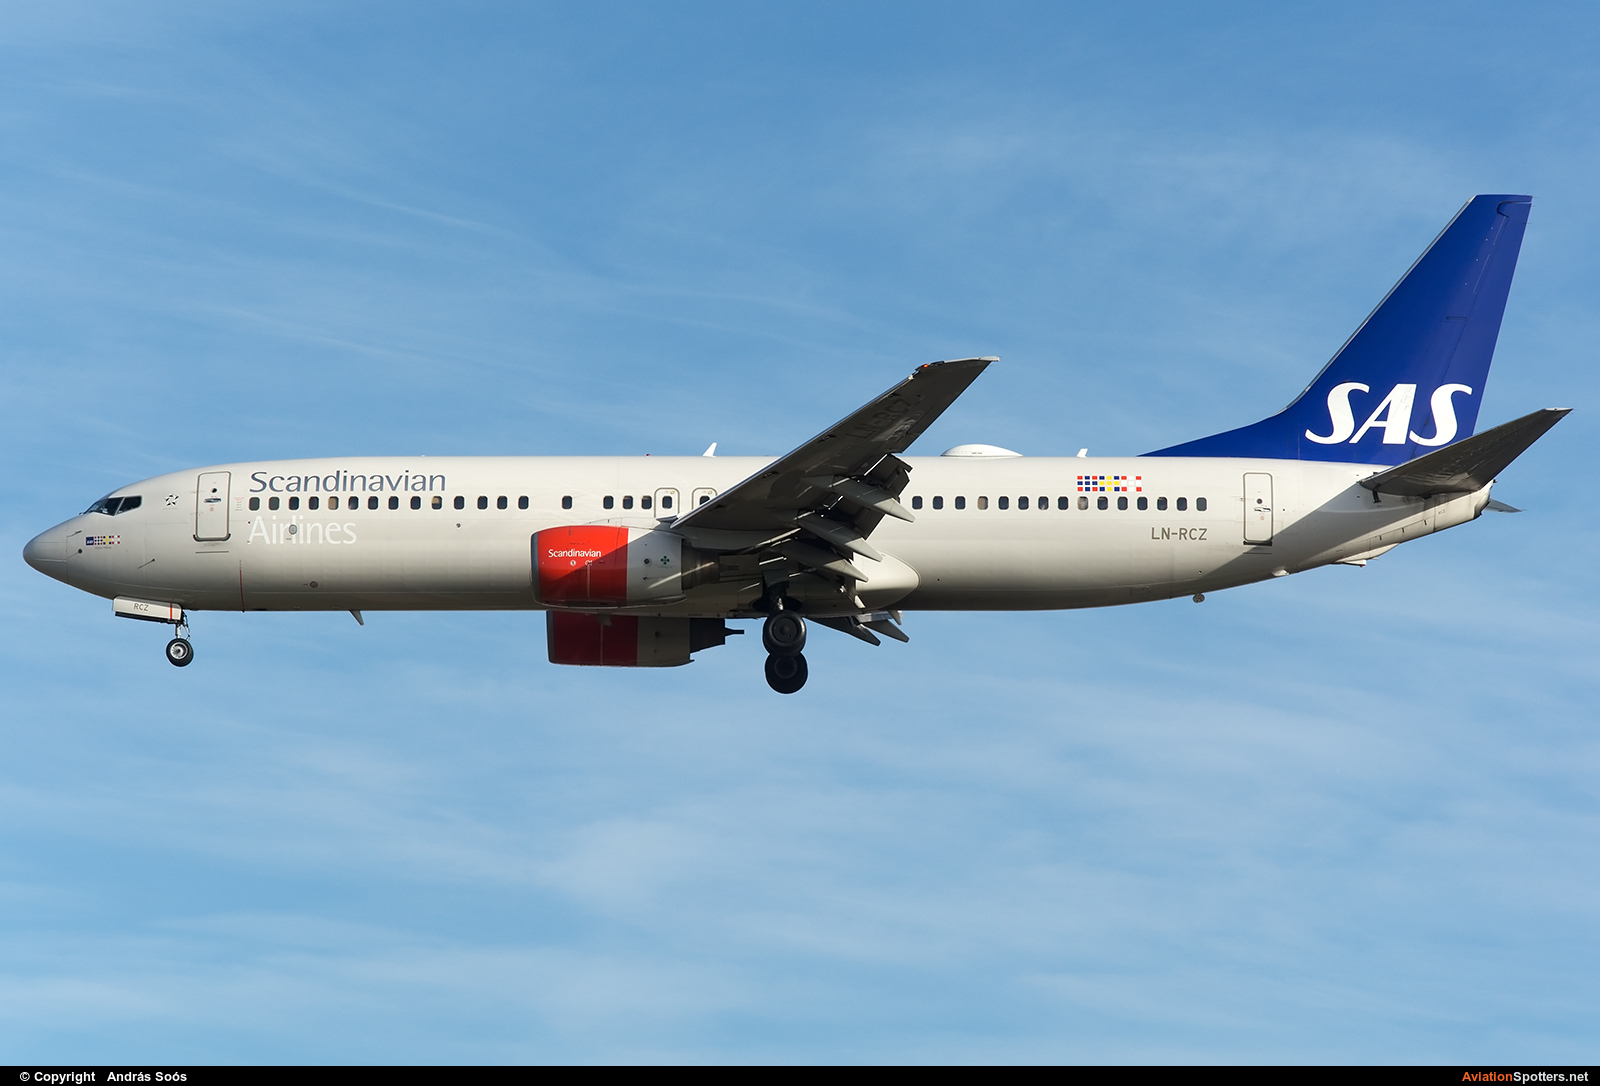 SAS - Scandinavian Airlines  -  737-800  (LN-RCZ) By András Soós (sas1965)